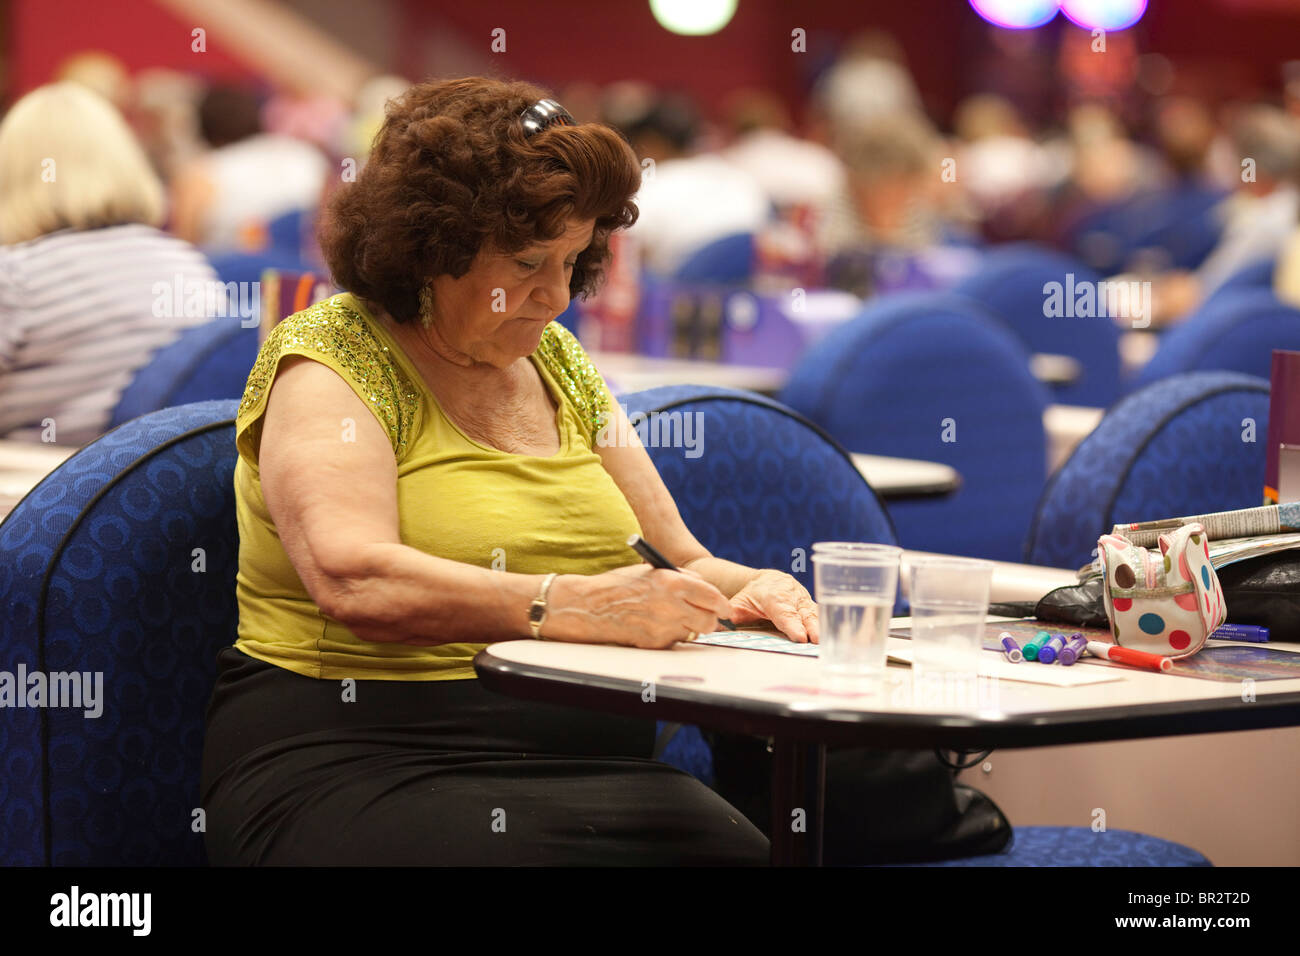 Mecca Bingo UK bingo company. People playing Bingo at Catford Bingo Hall, London, UK. Photo:Jeff Gilbert Stock Photo